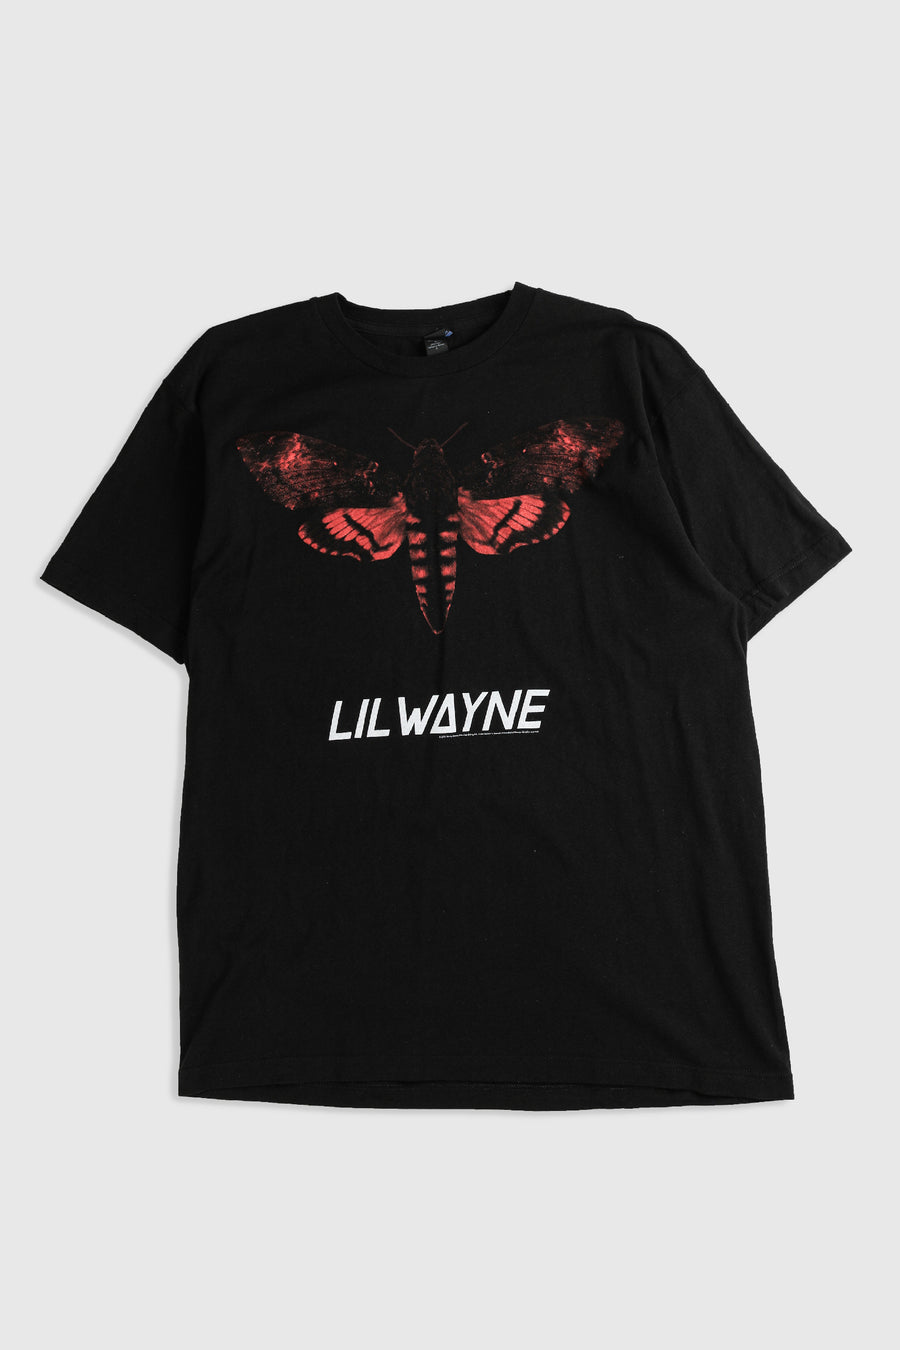 Deadstock Lil Wayne Tee - L, XL